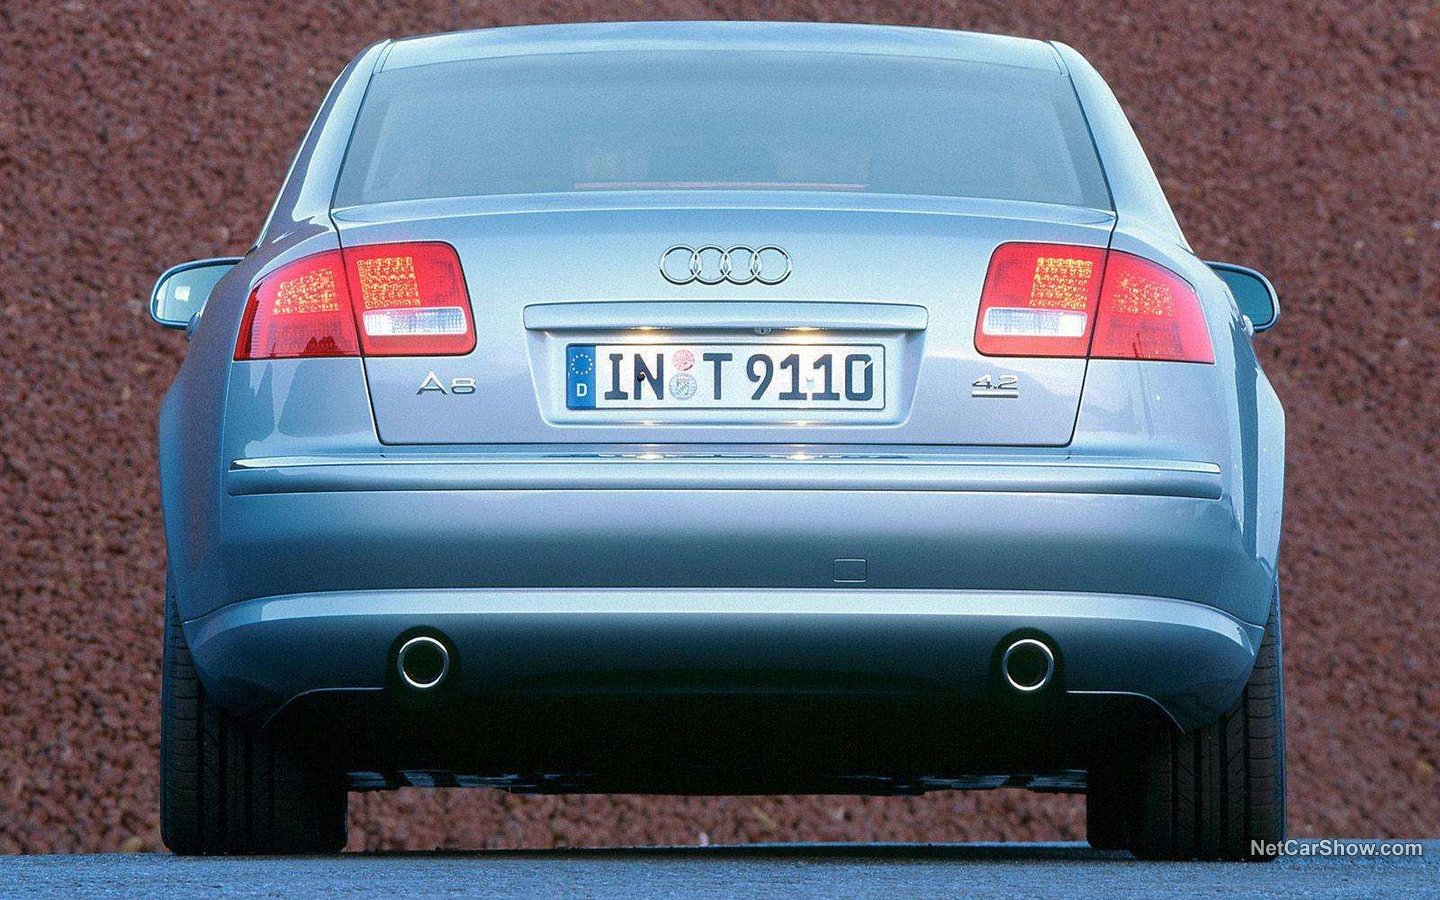 Audi A8 4